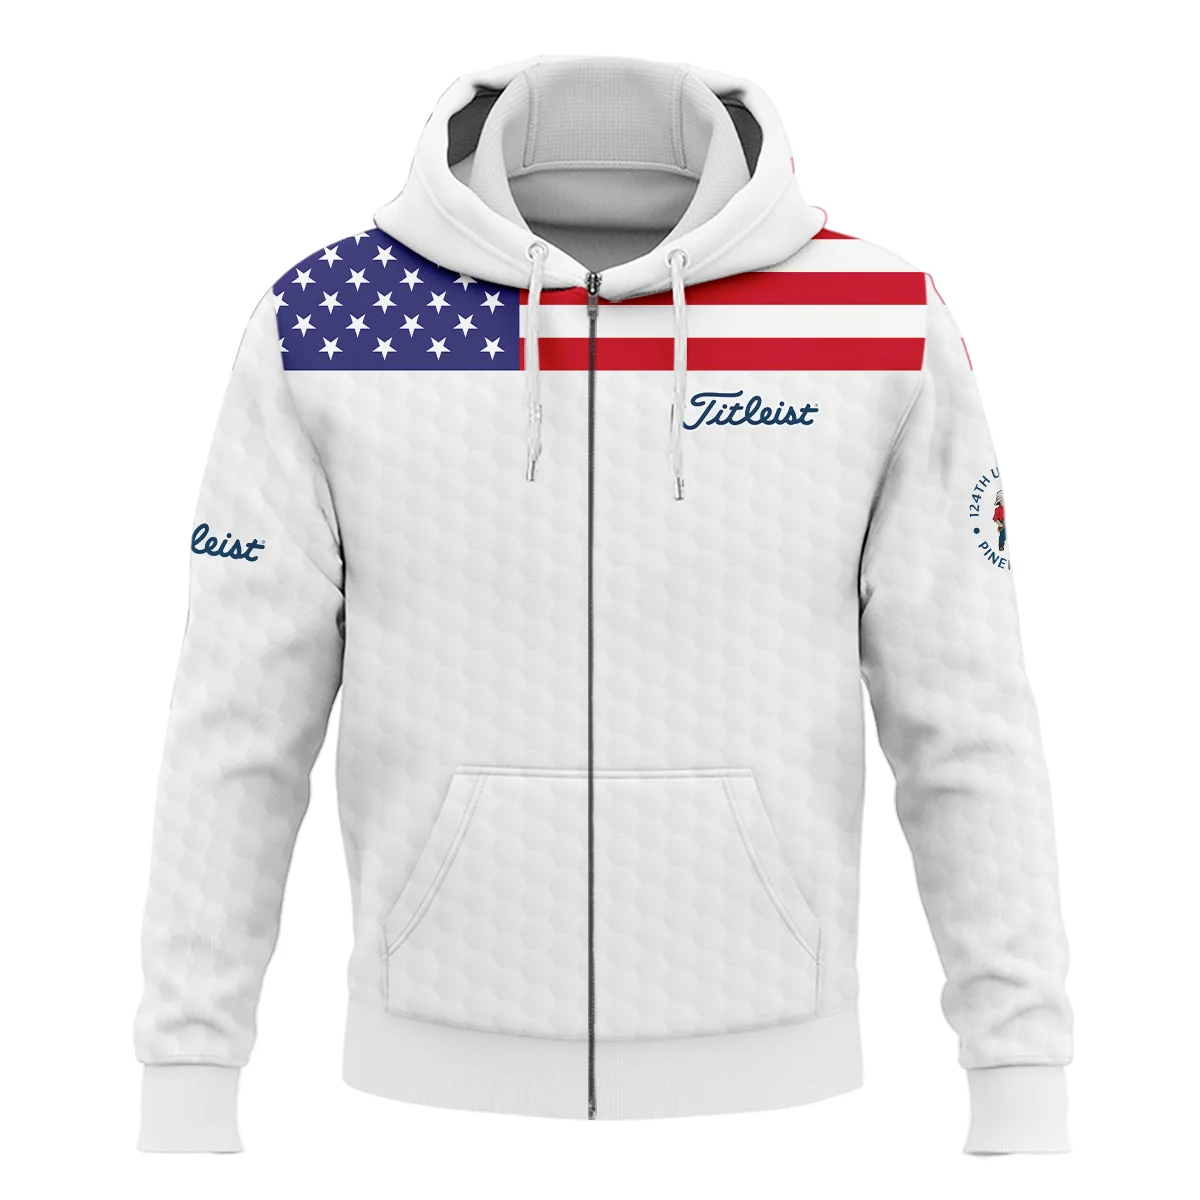 Titleist 124th U.S. Open Pinehurst Long Polo Shirt USA Flag Golf Pattern All Over Print Long Polo Shirt For Men